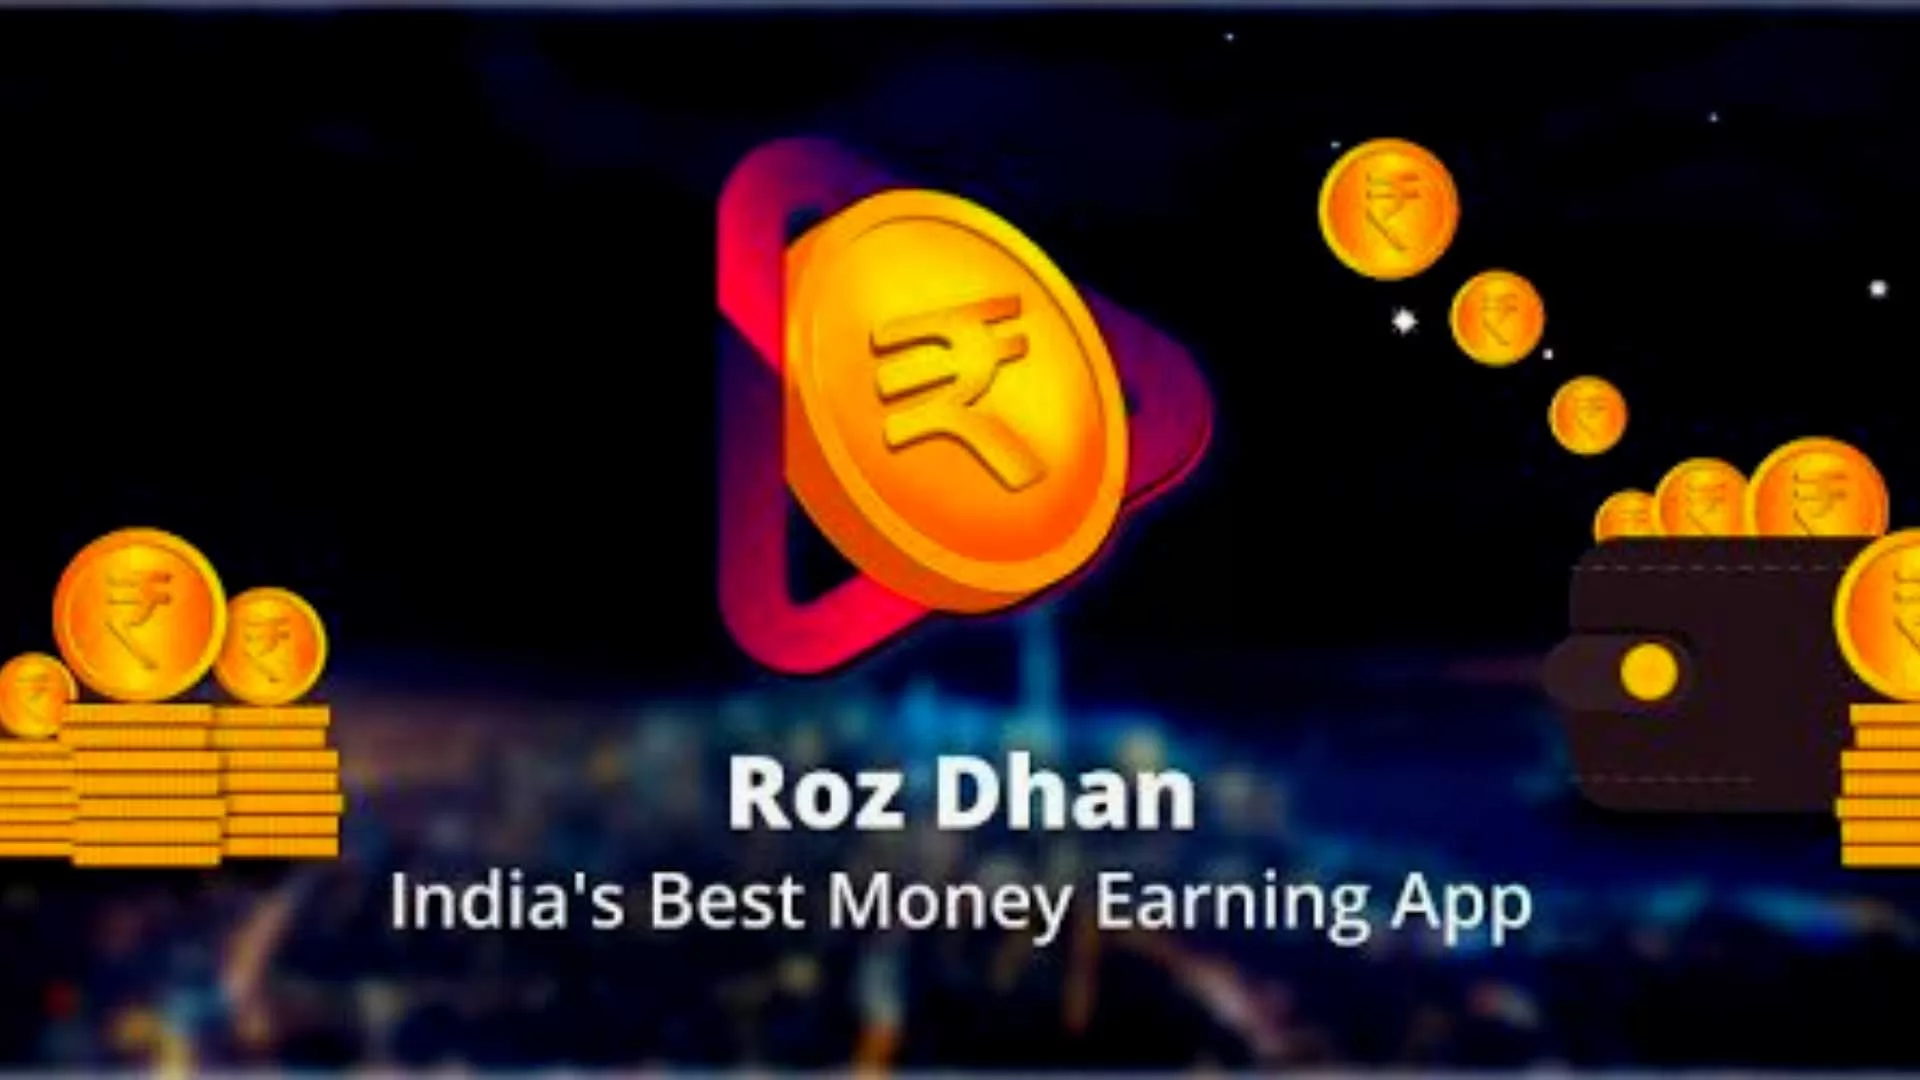 Rozdhan App